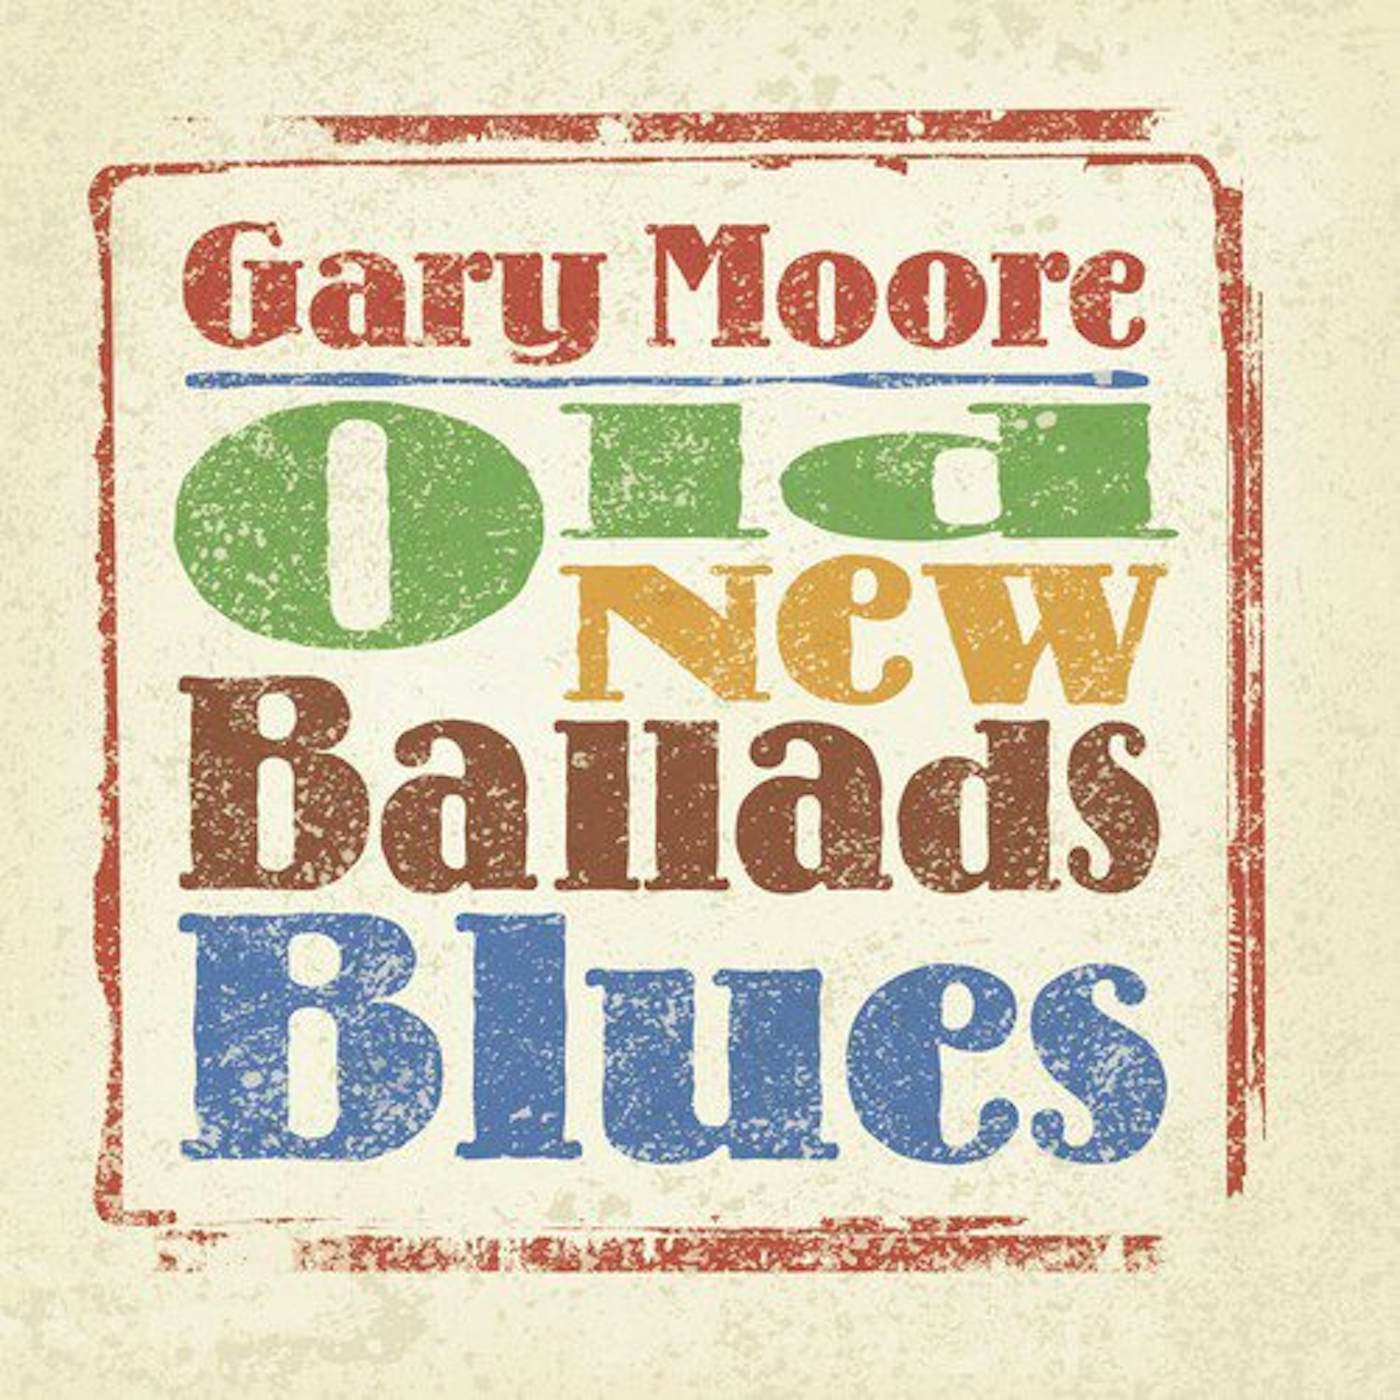 Gary Moore OLD NEW BALLADS BLUES (2LP) Vinyl Record